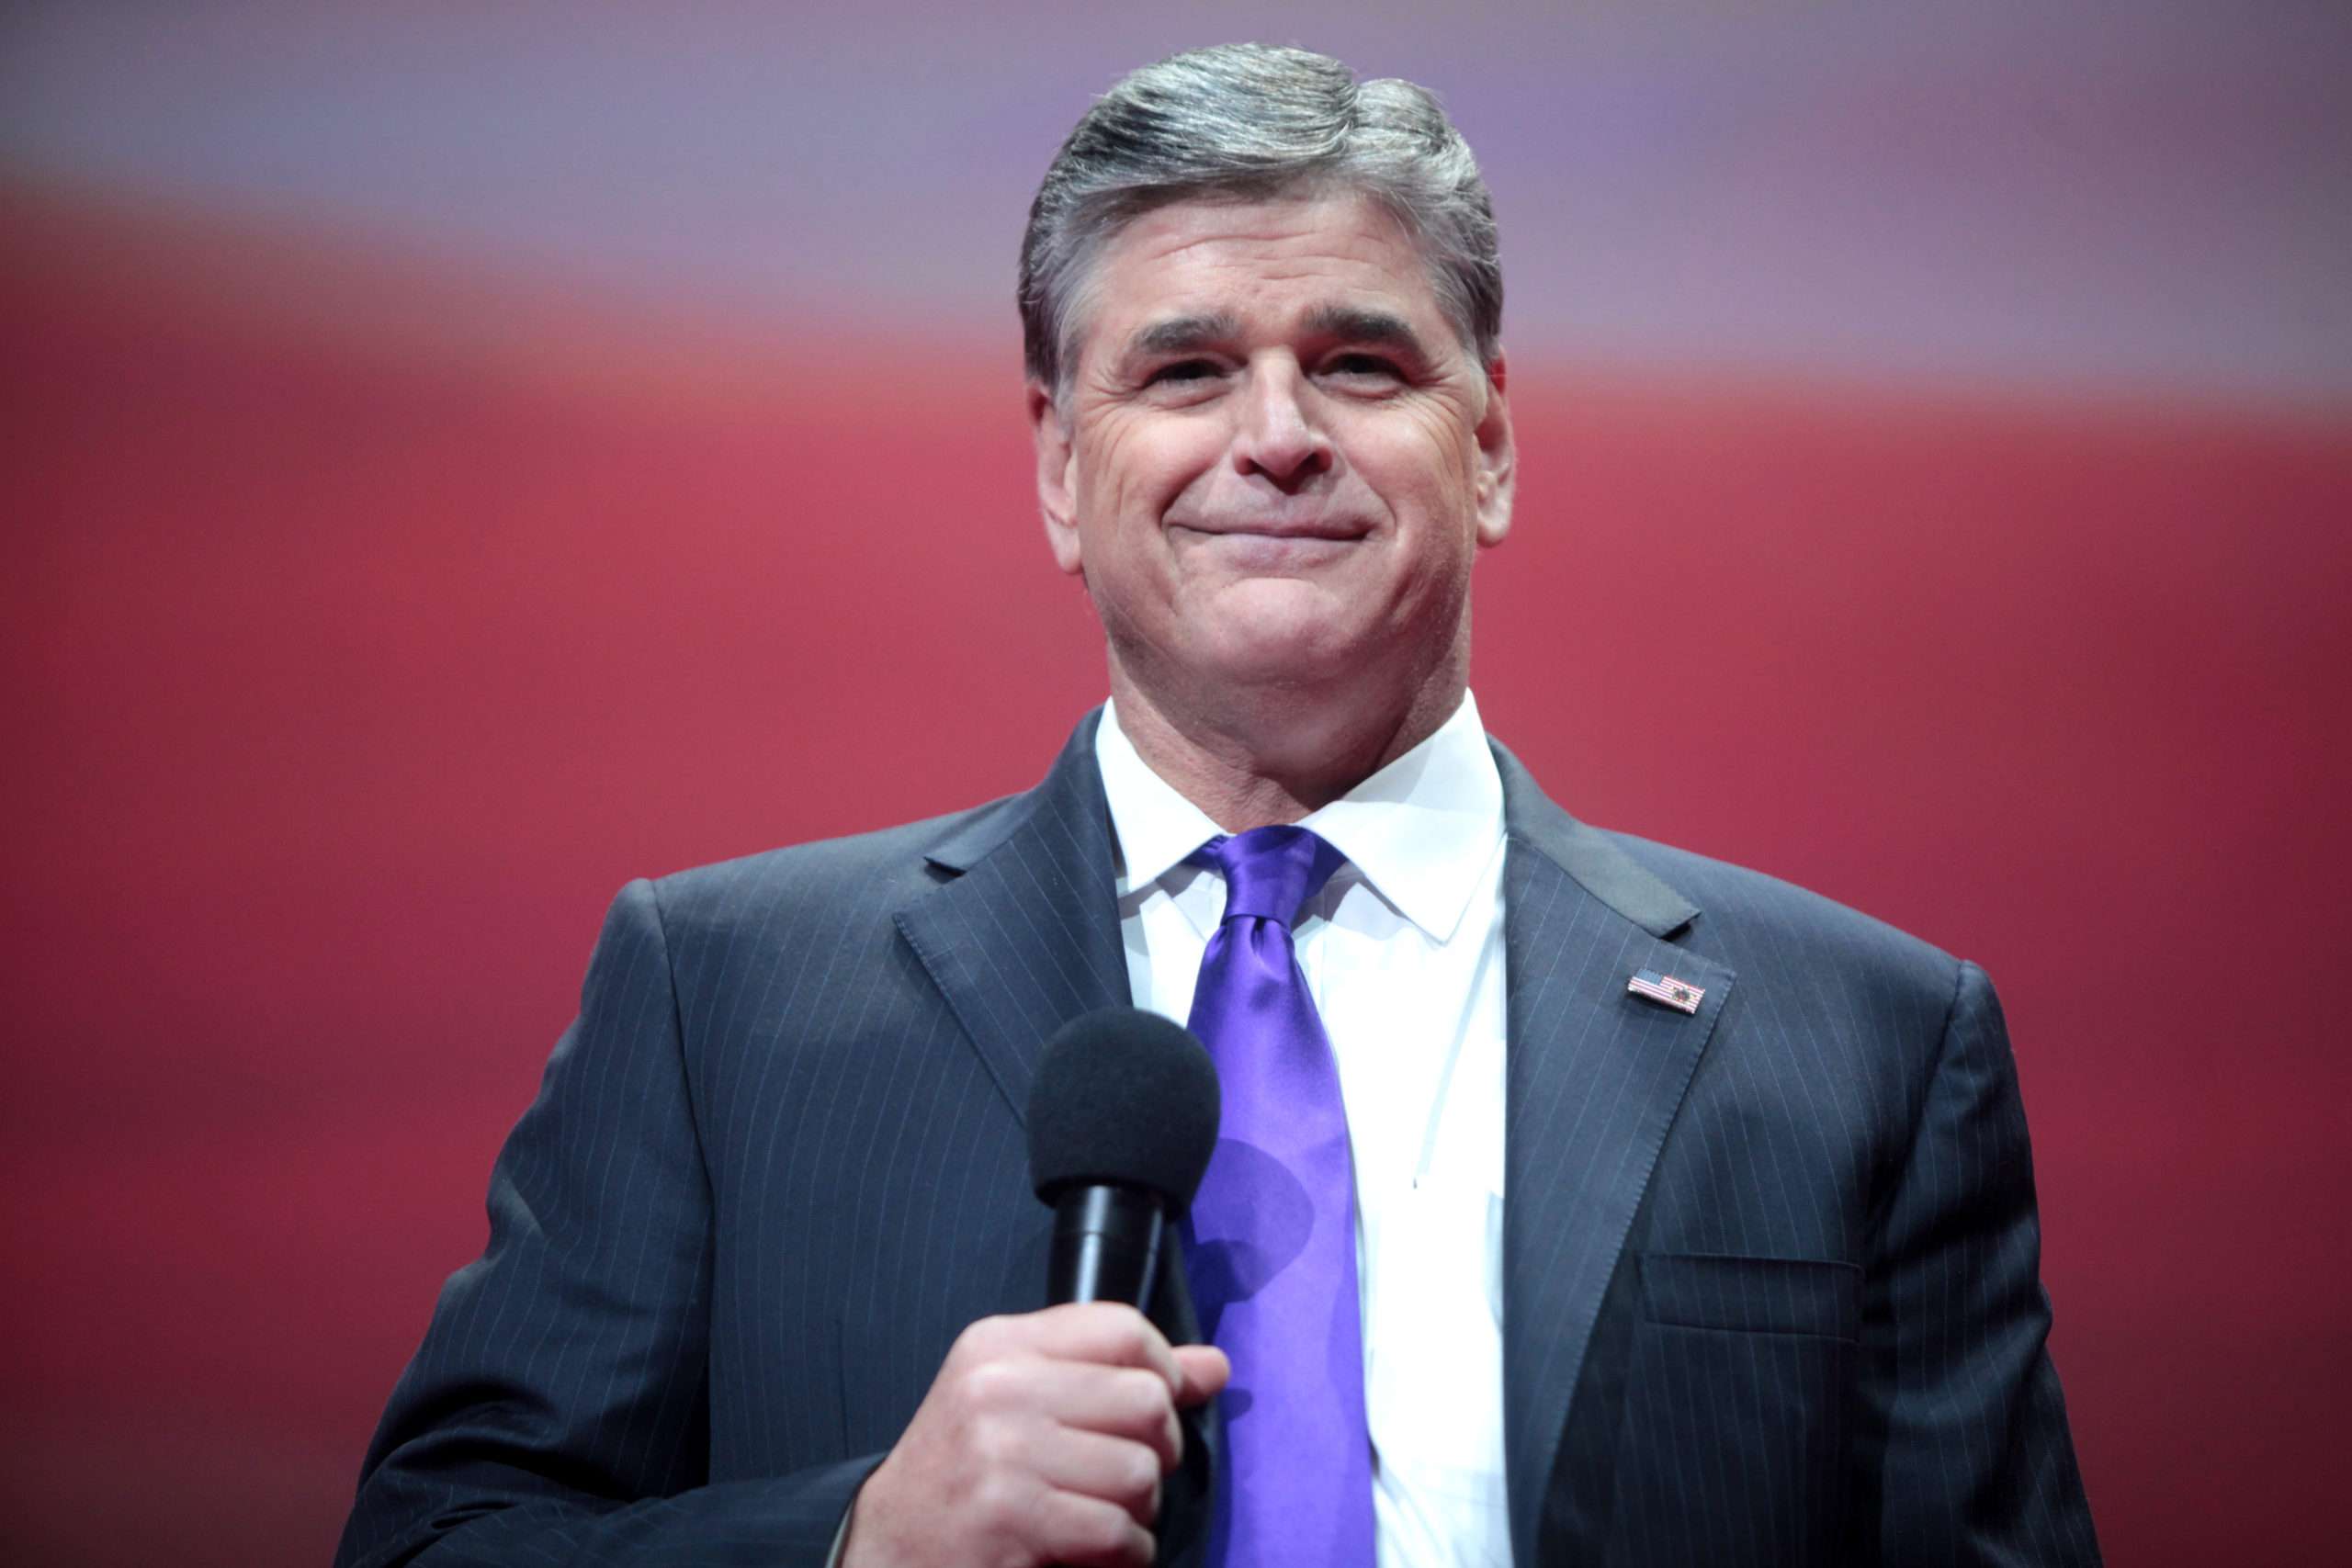 Corrupt Fox News personality Sean Hannity